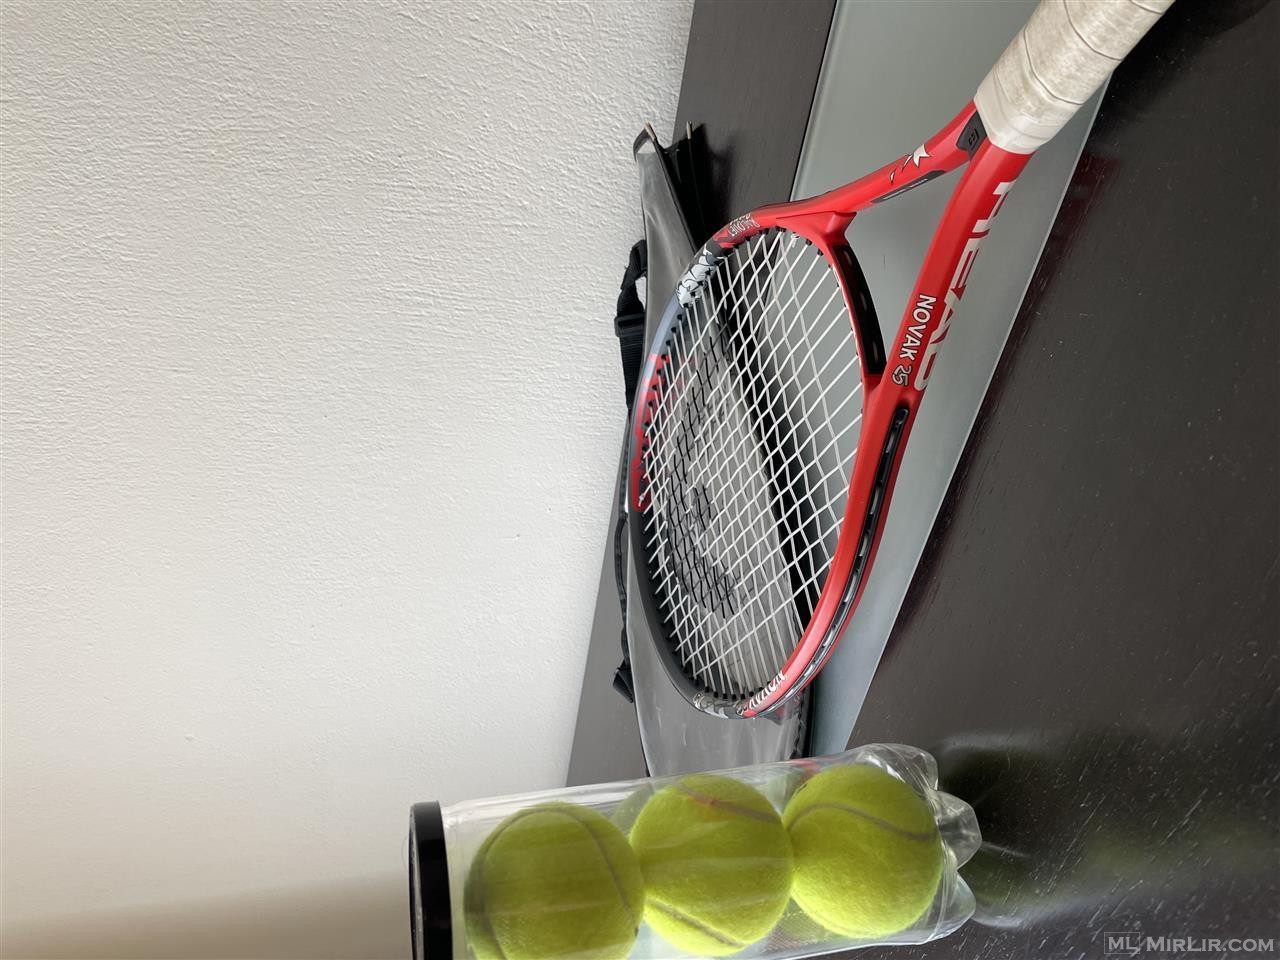 Rakete tenisi